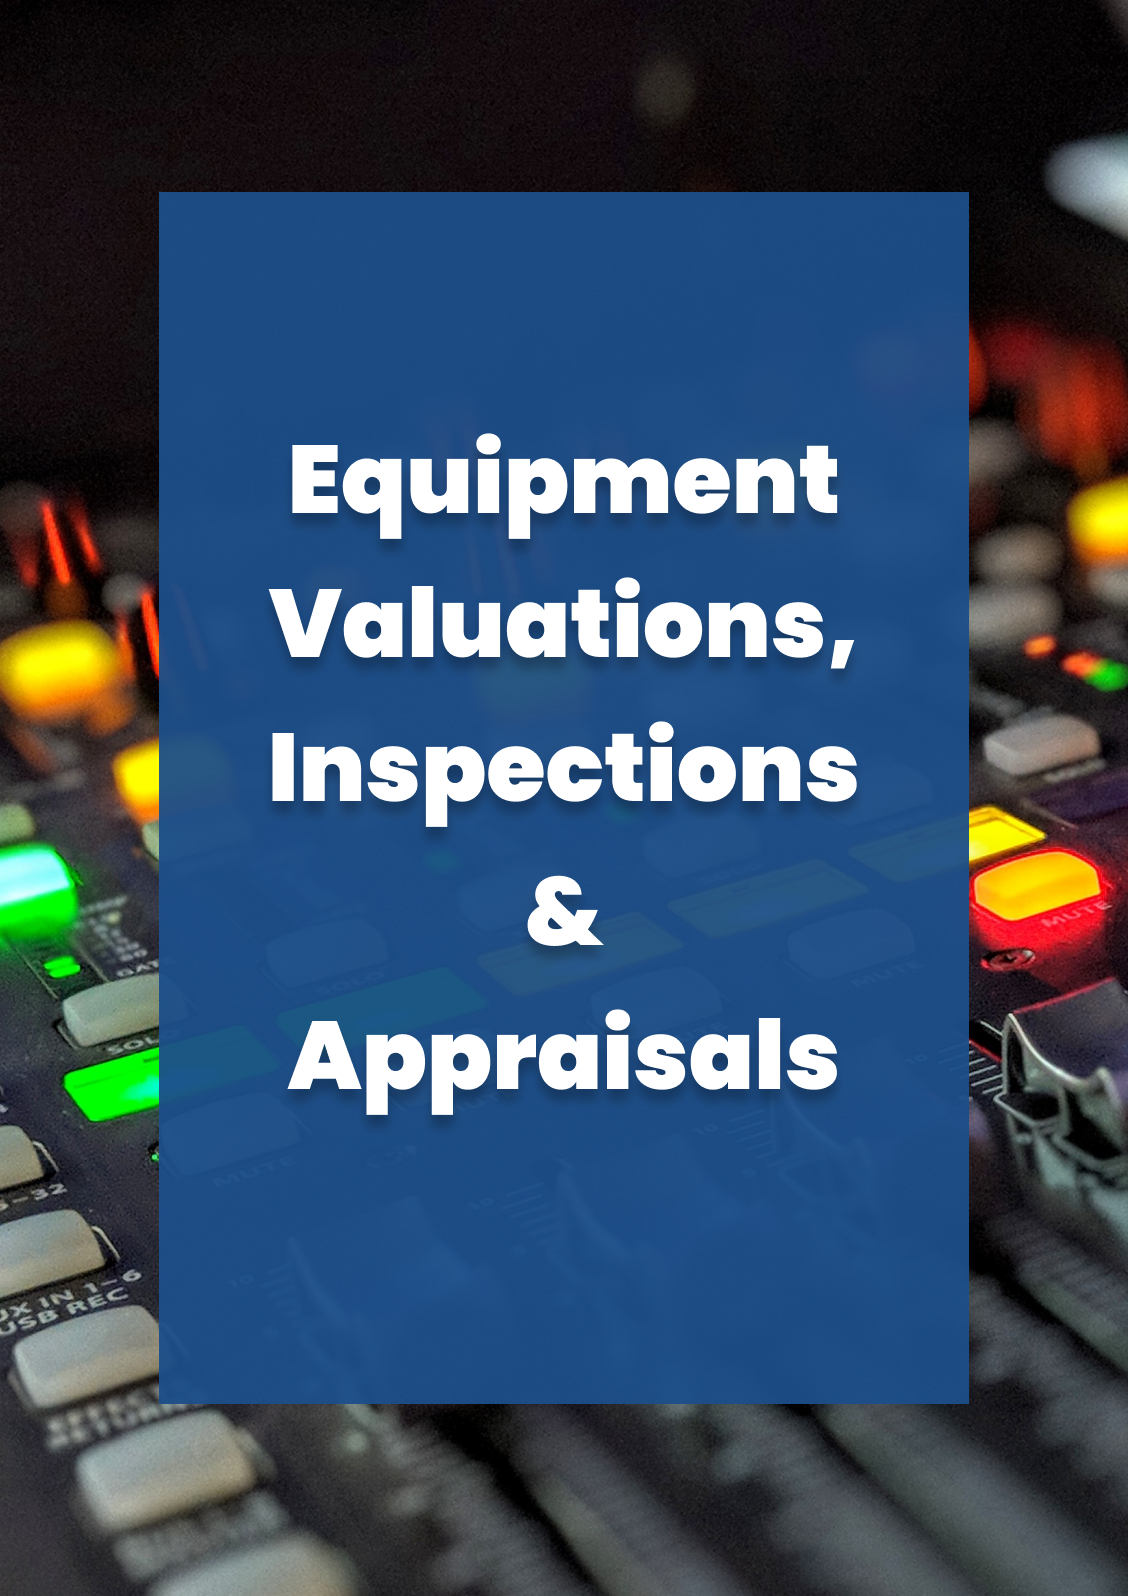 Equipment Valuations, Inspections & appraisals